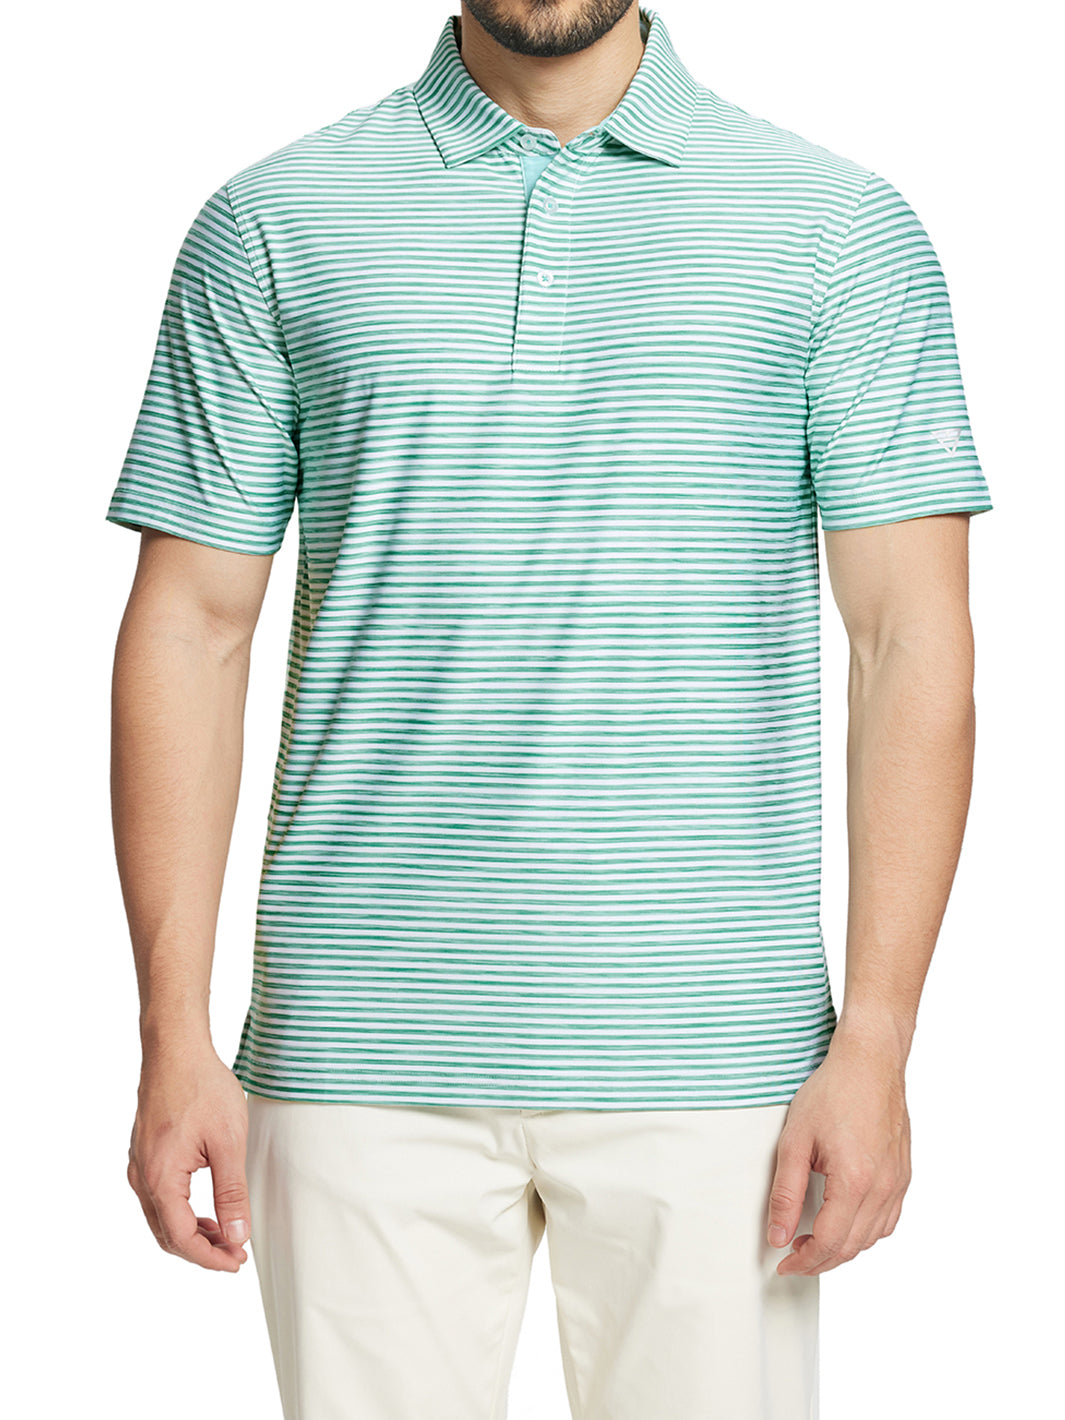 Men's Striped Golf Polo Shirts-Green White